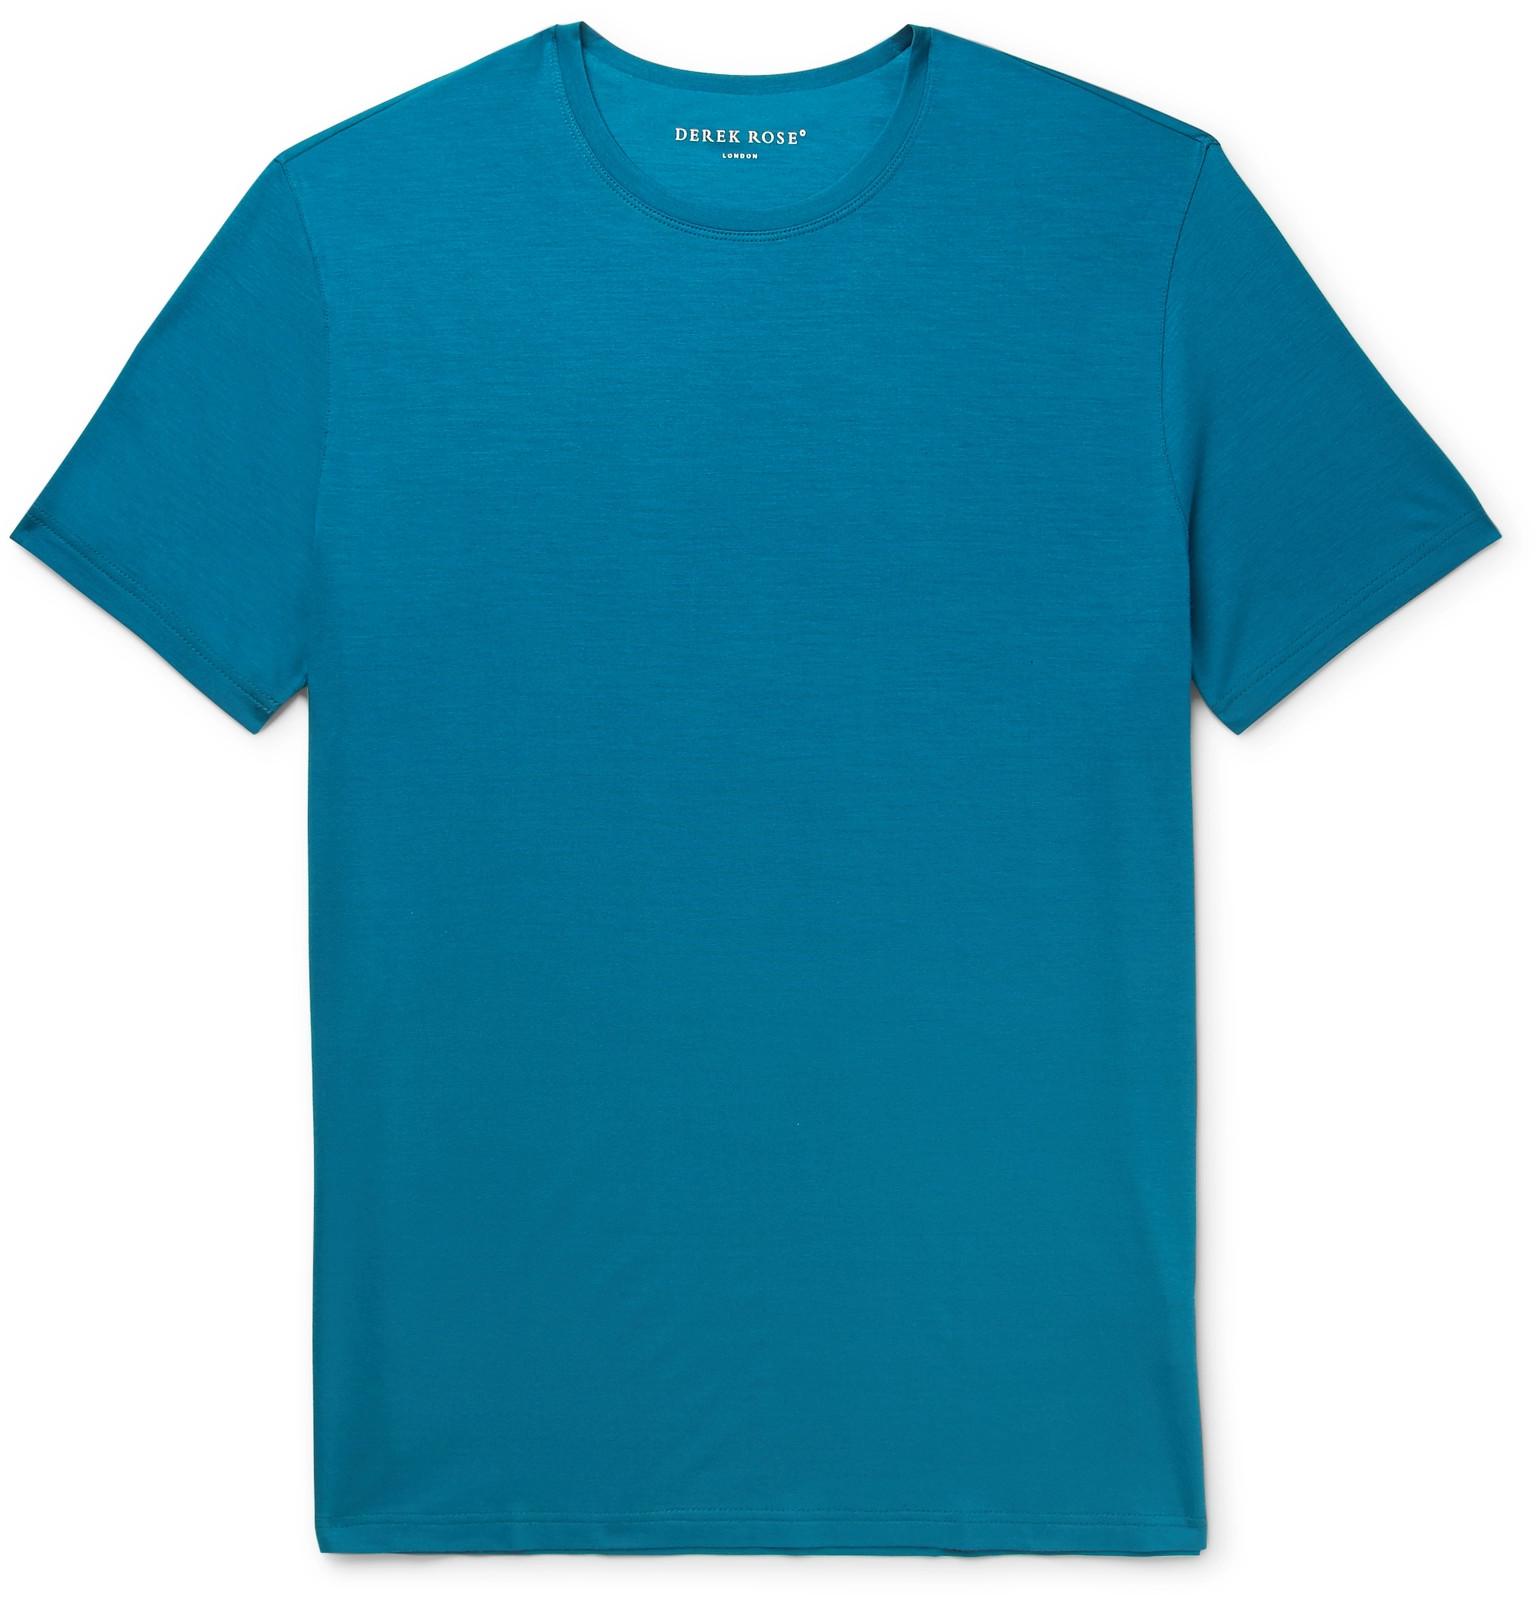 Derek Rose Basel Stretch-micro Modal Jersey T-shirt in Blue for Men - Lyst